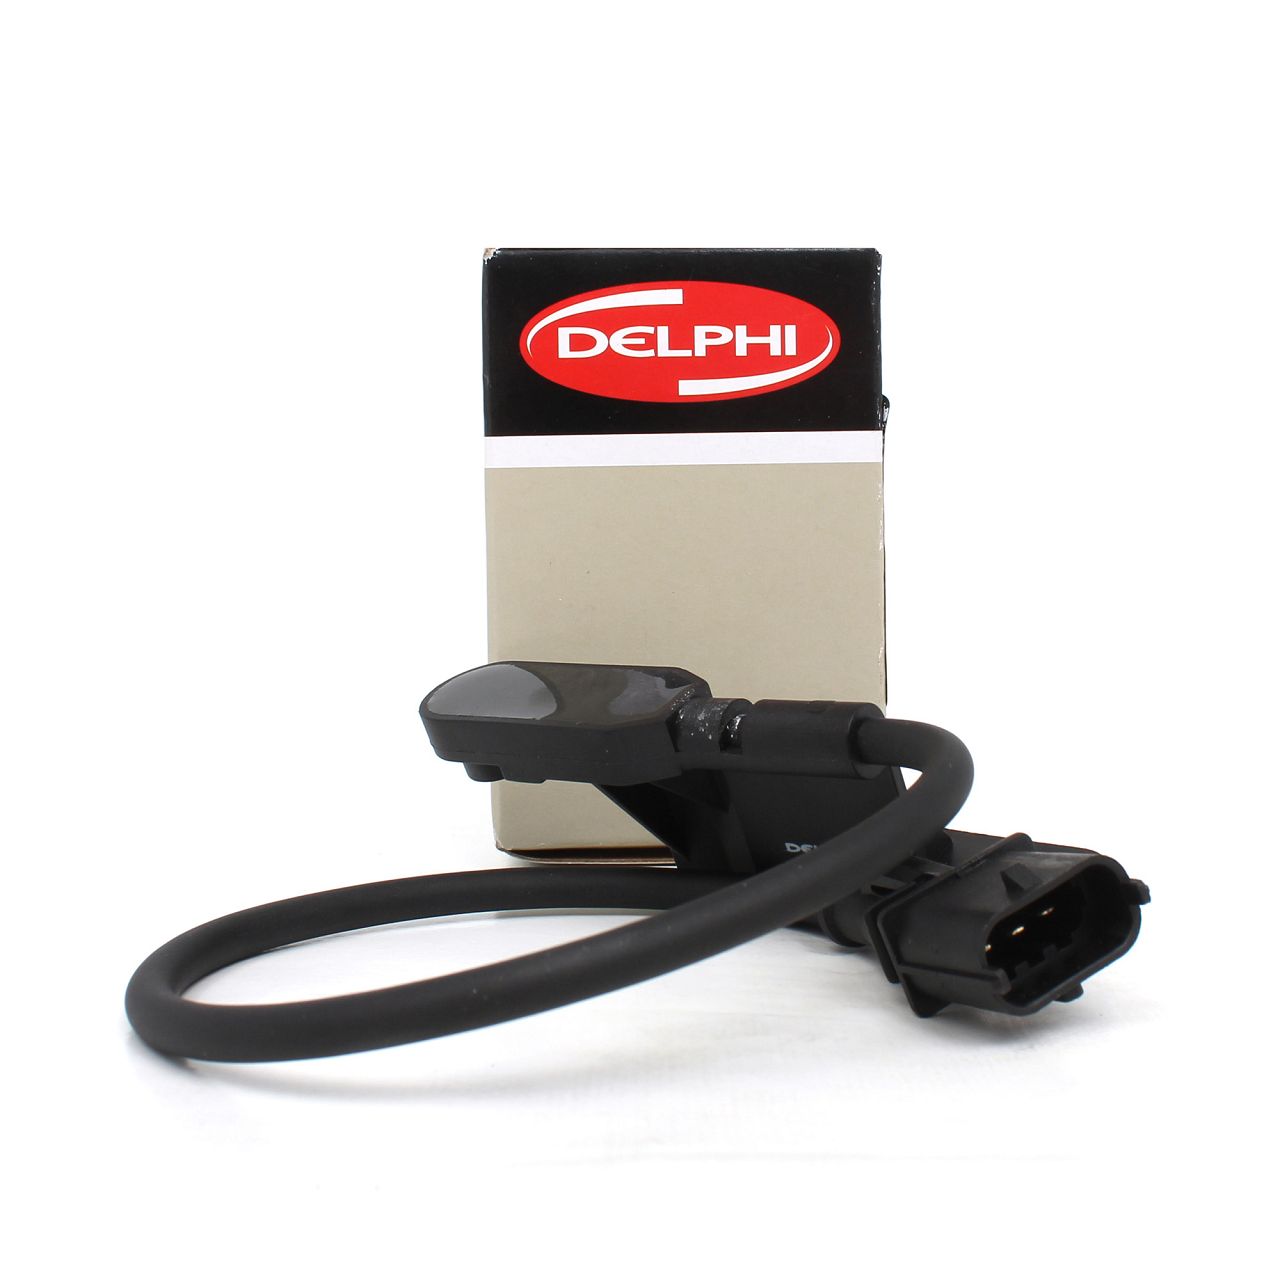 DELPHI Sensor Nockenwelle Nockenwellensensor SS10518-12B1 für Opel 1238937